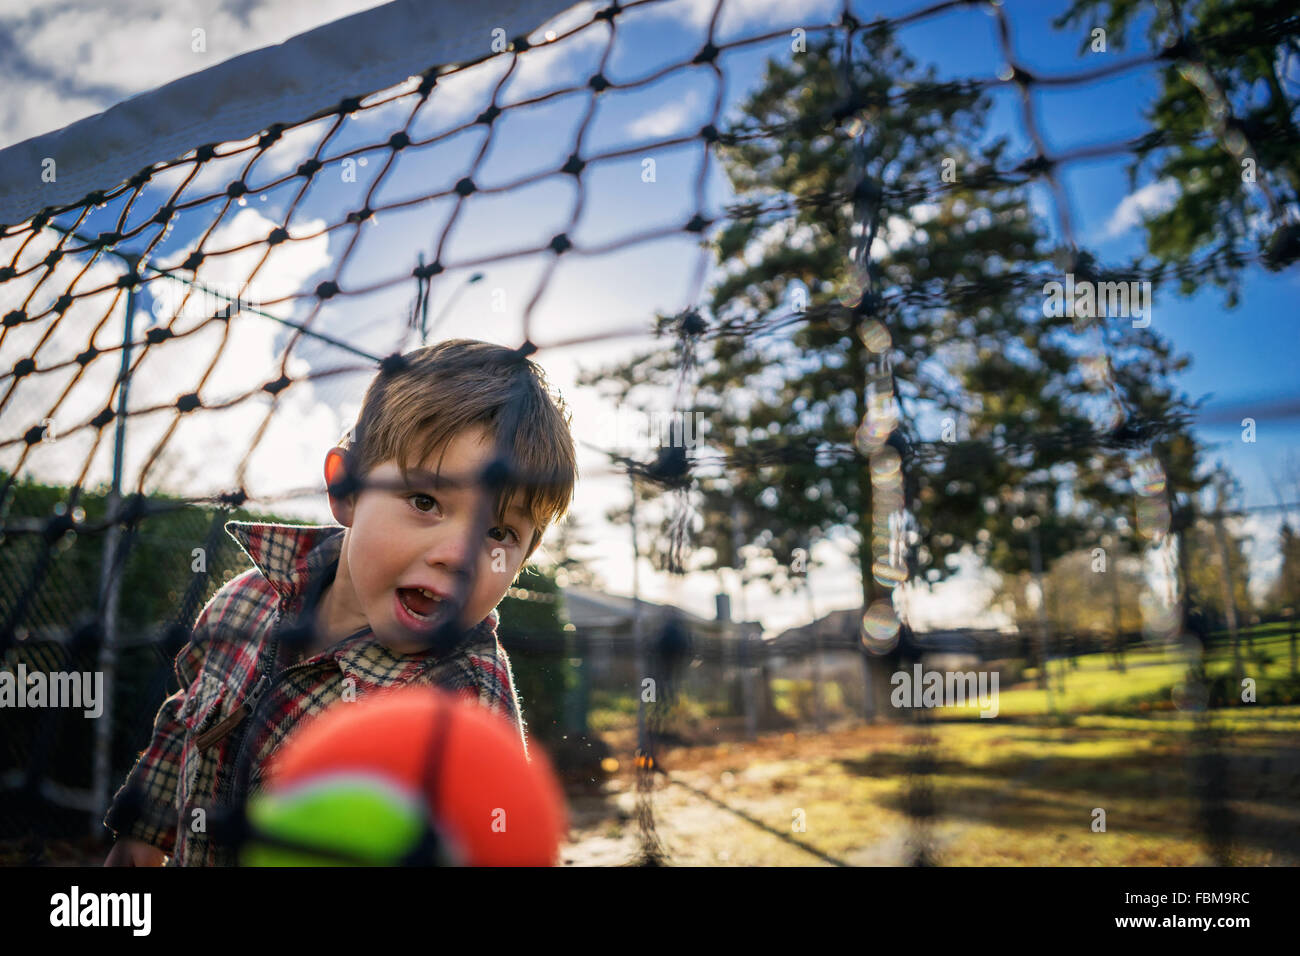 View through a net of a boy throwing tennis ball Stock Photo